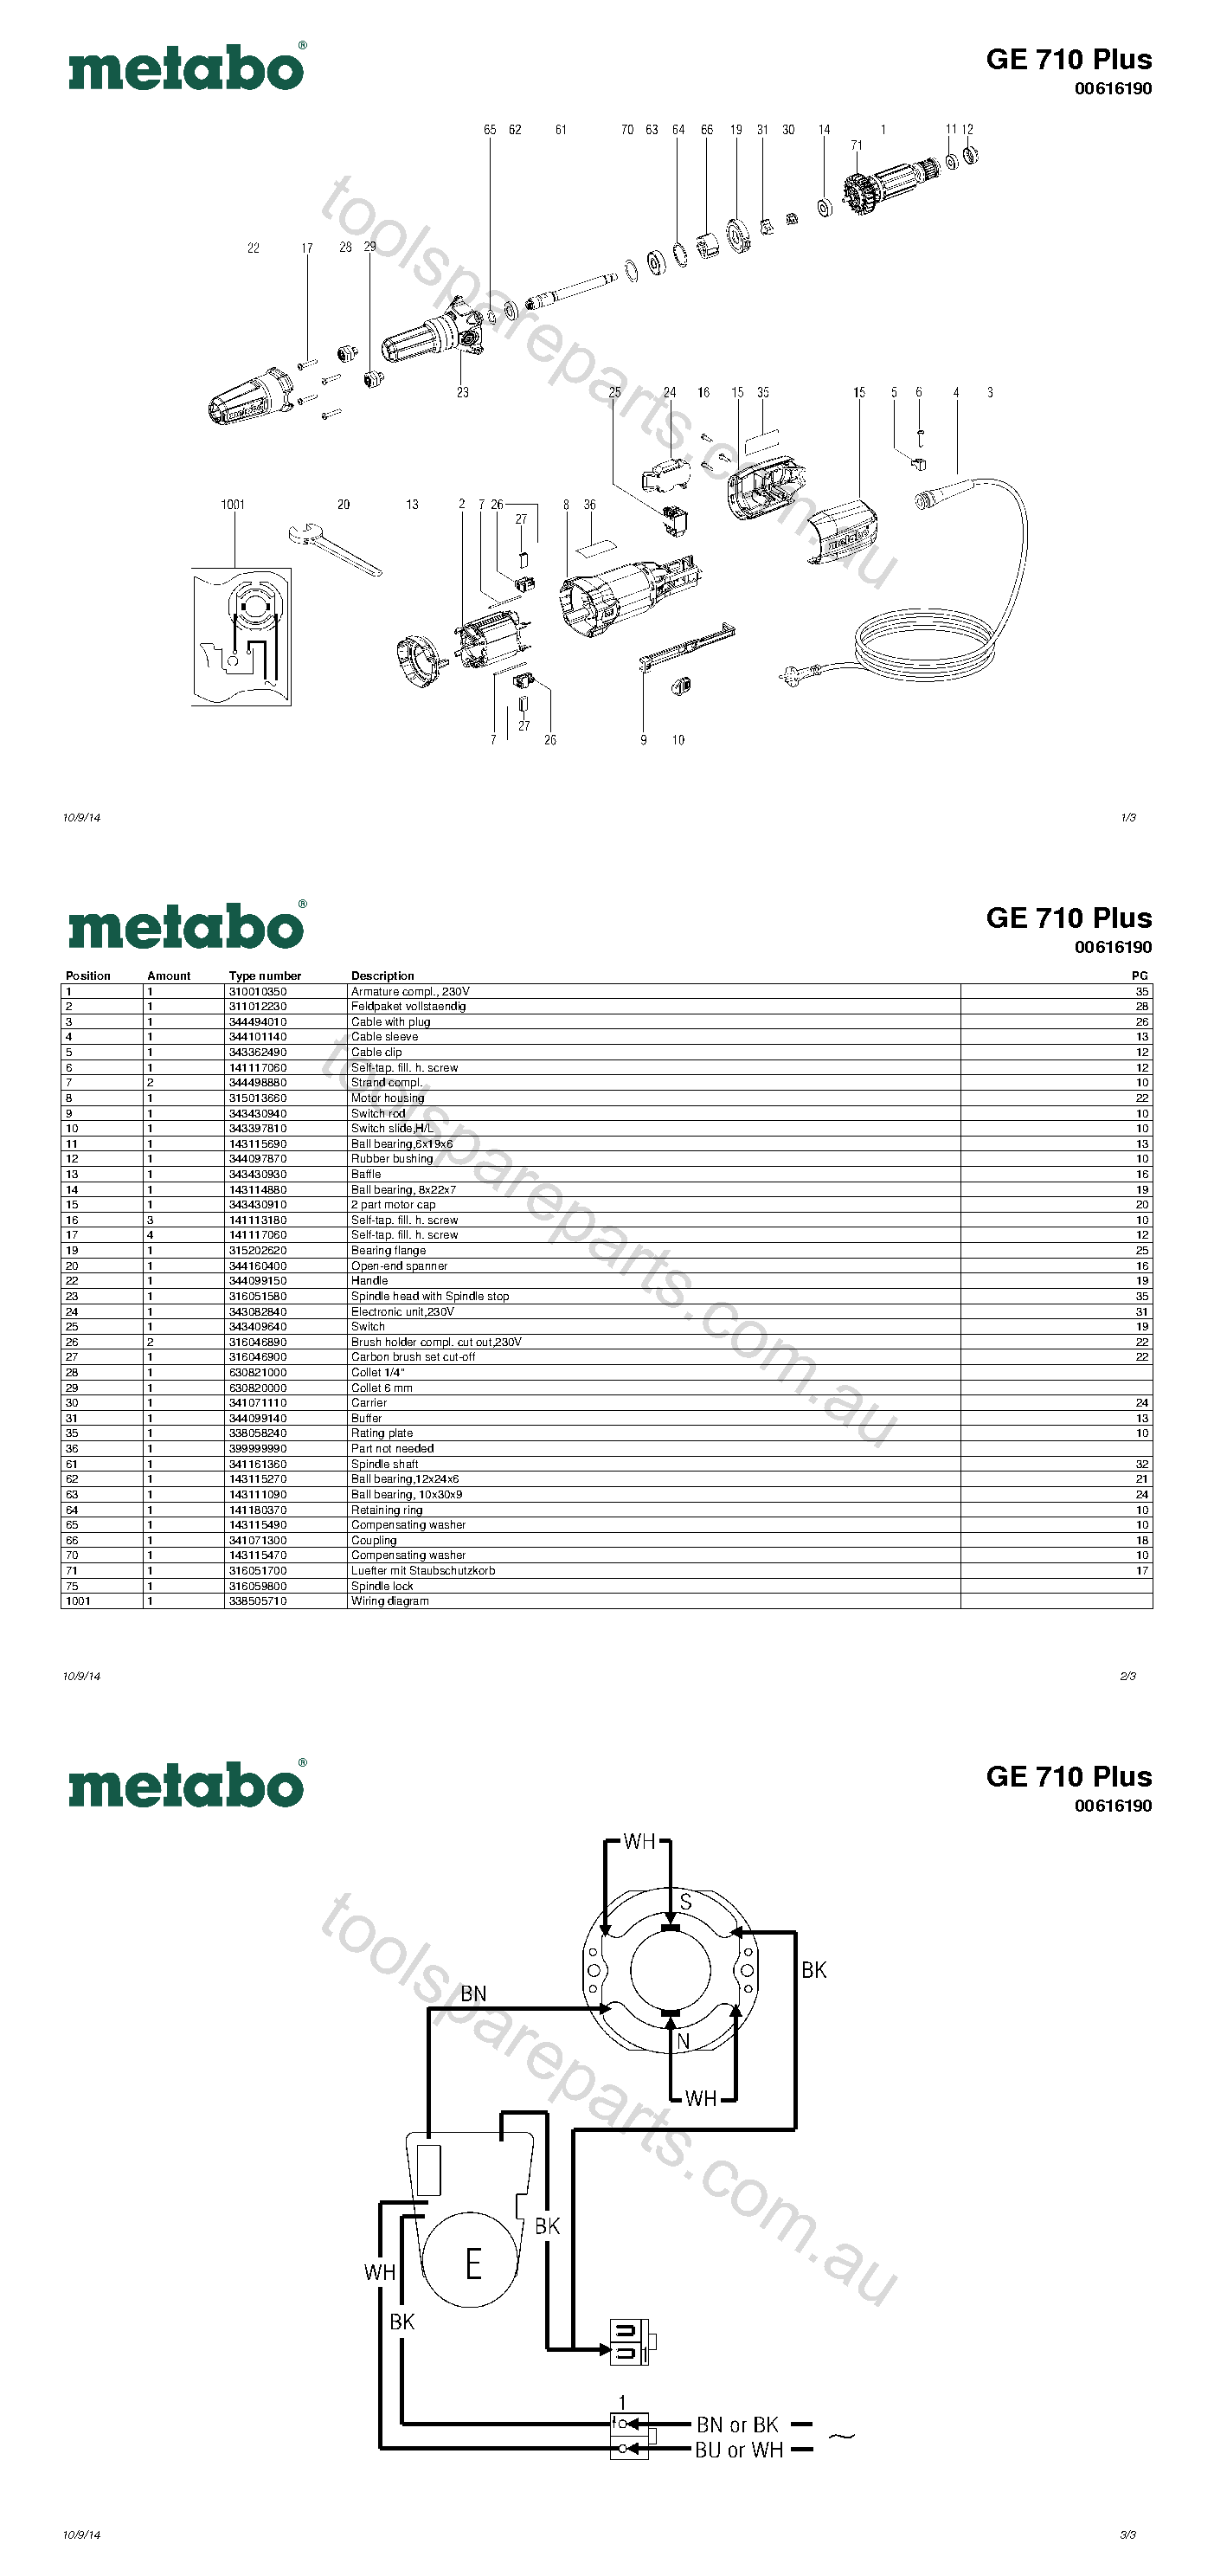 Metabo GE 710 Plus 00616190  Diagram 1